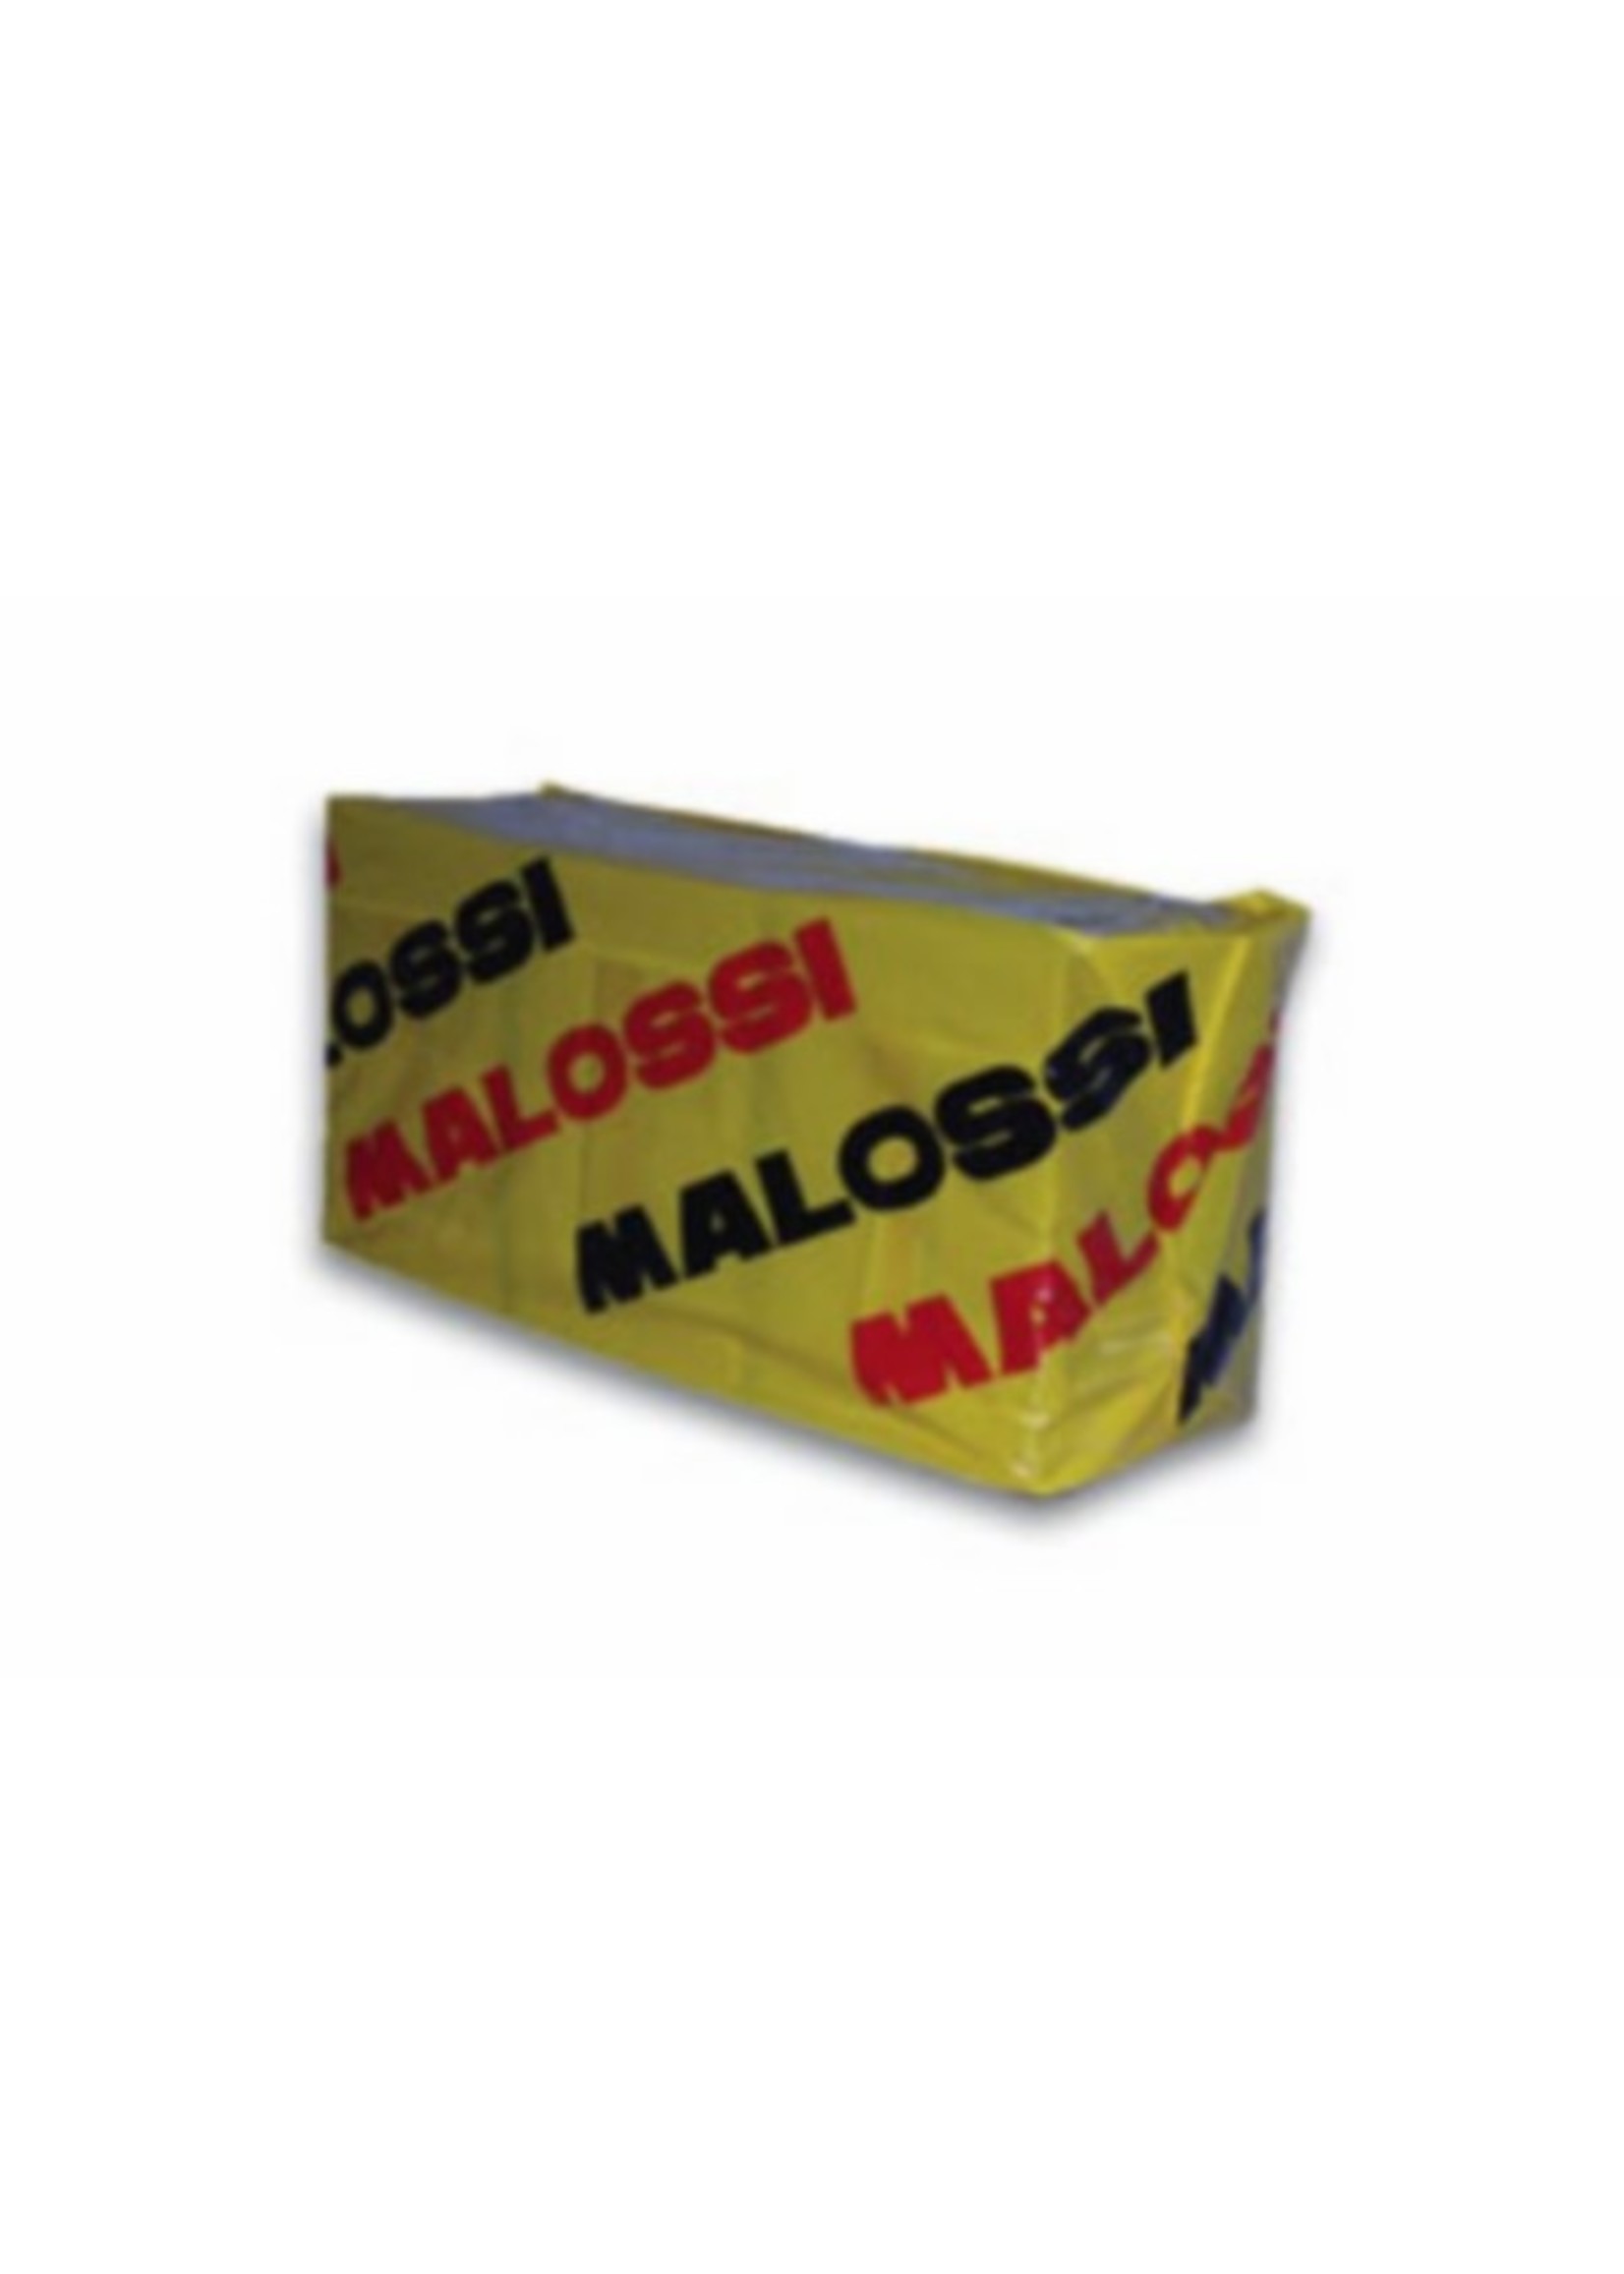 accessoire plastic zak strobaal geel malossi 427733